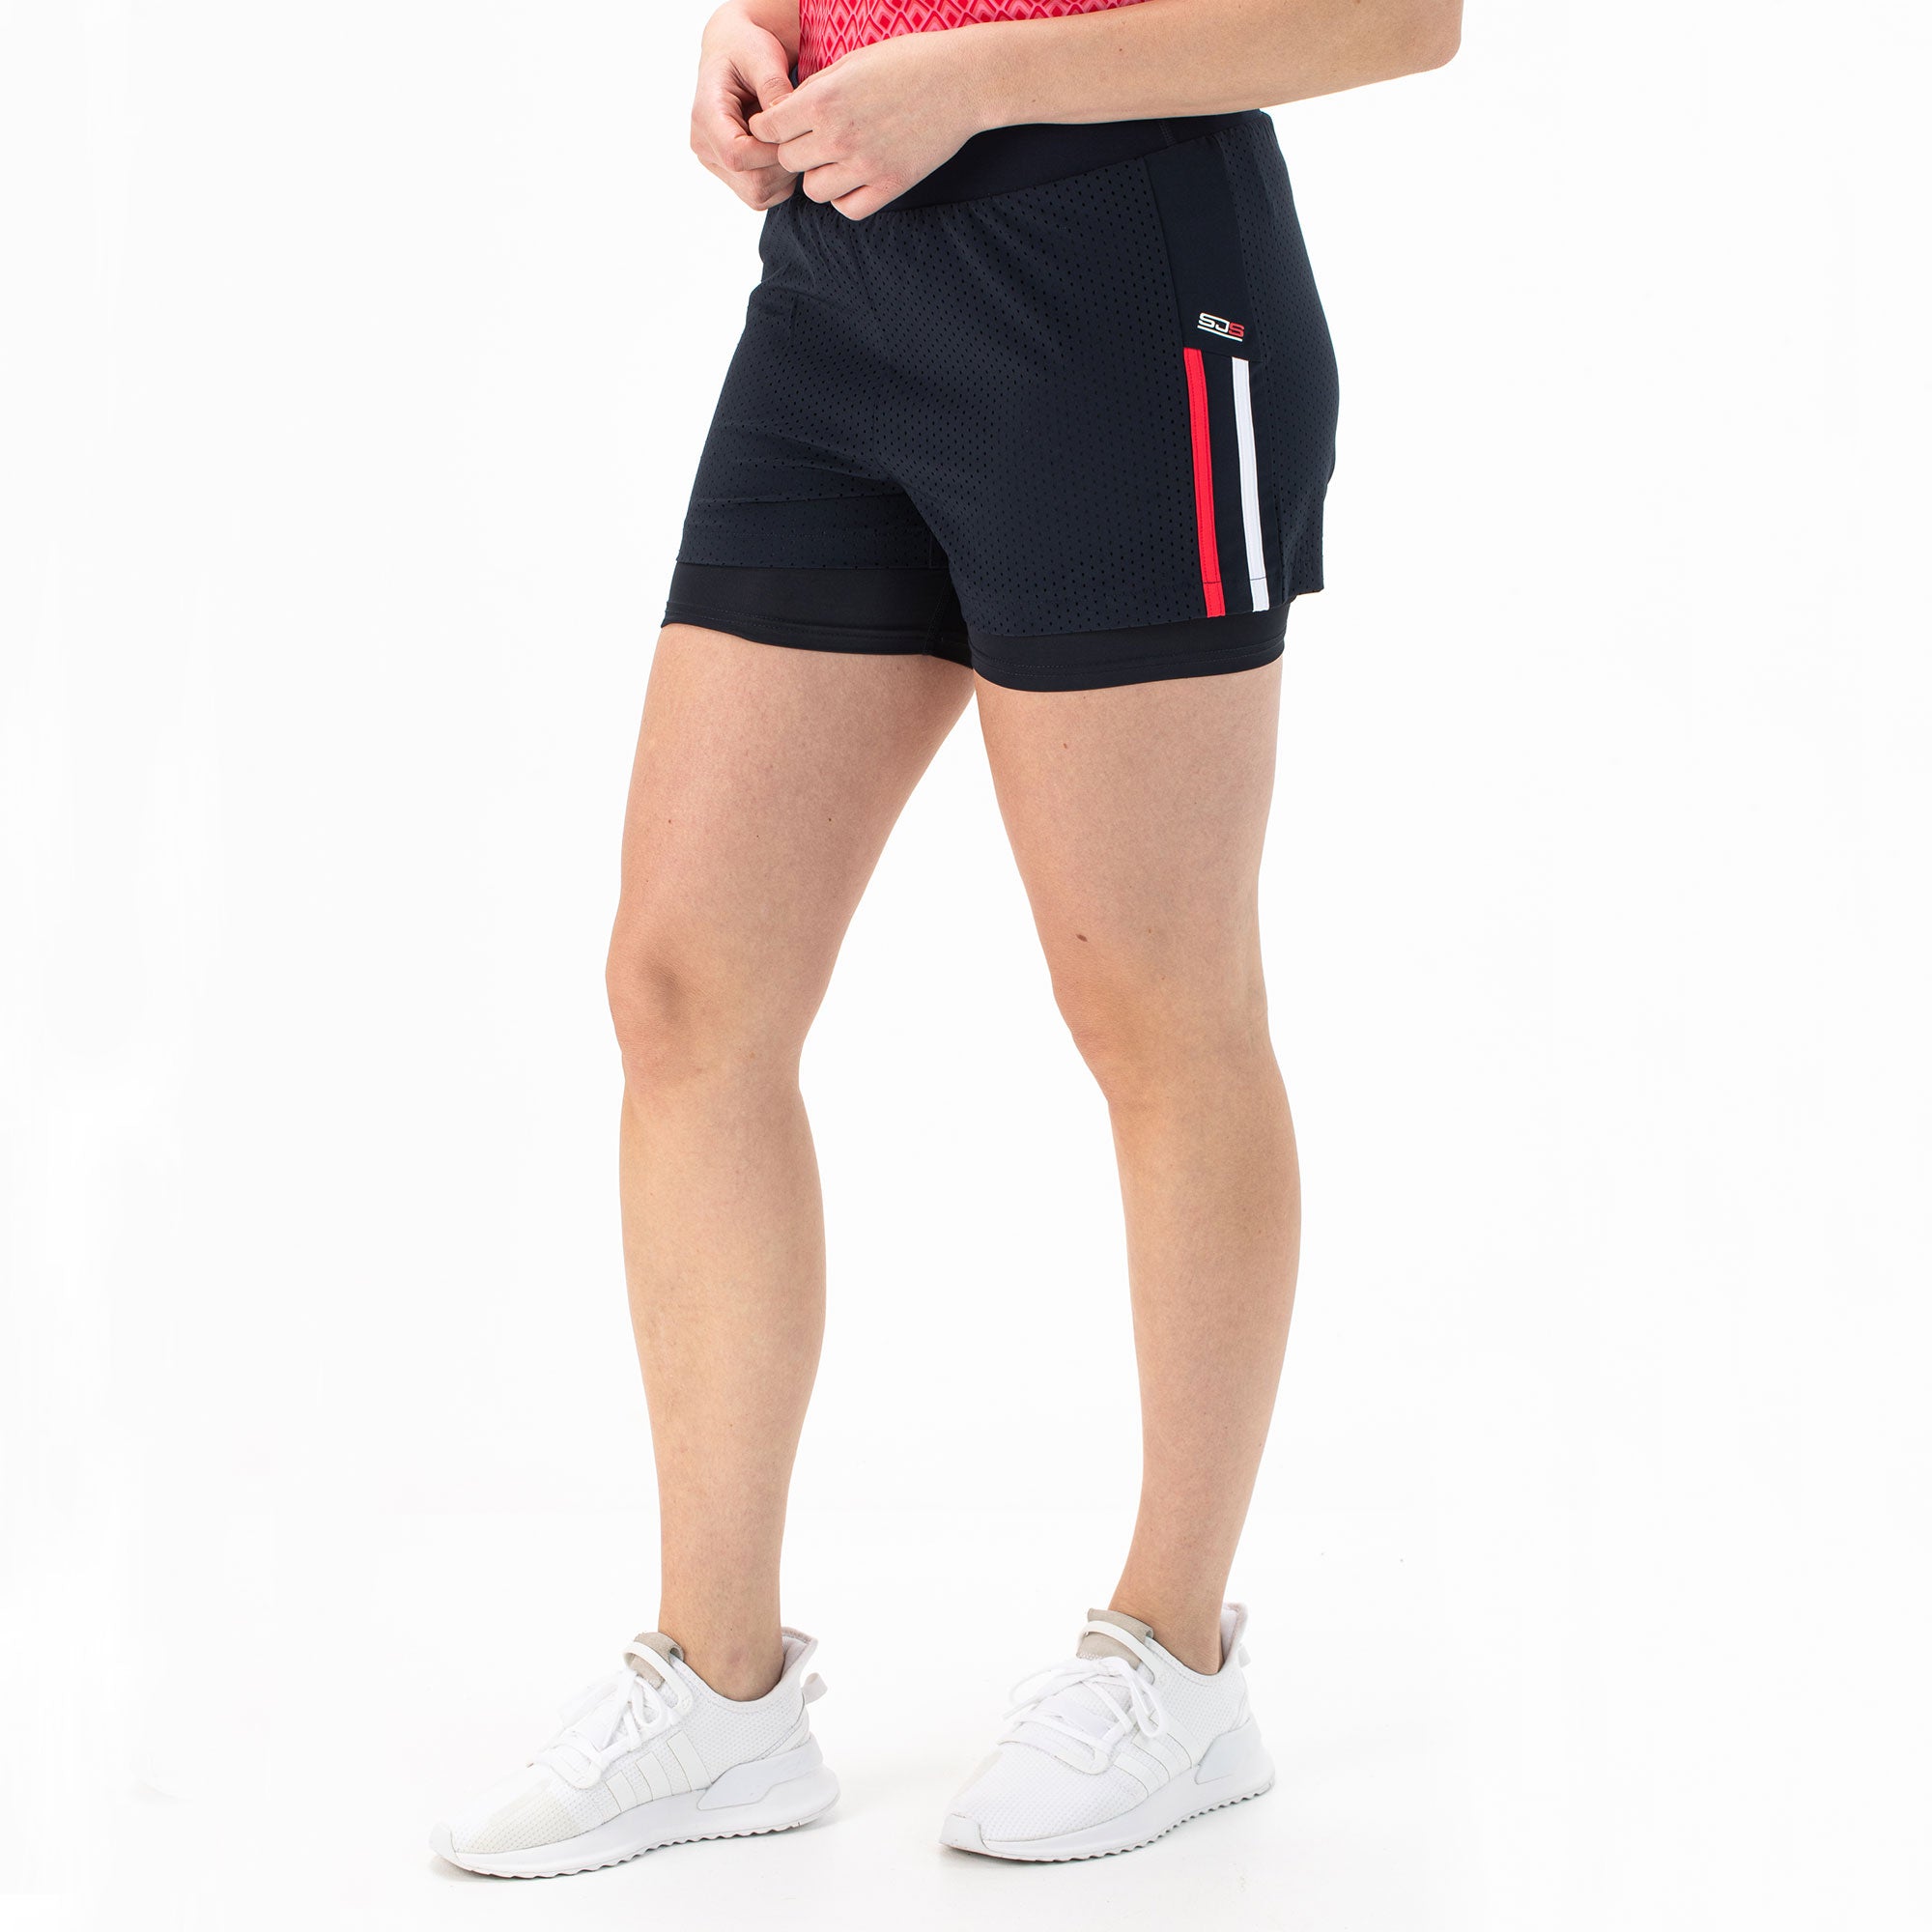 Sjeng Sports Lexi Women's Tennis Shorts - Red (1)